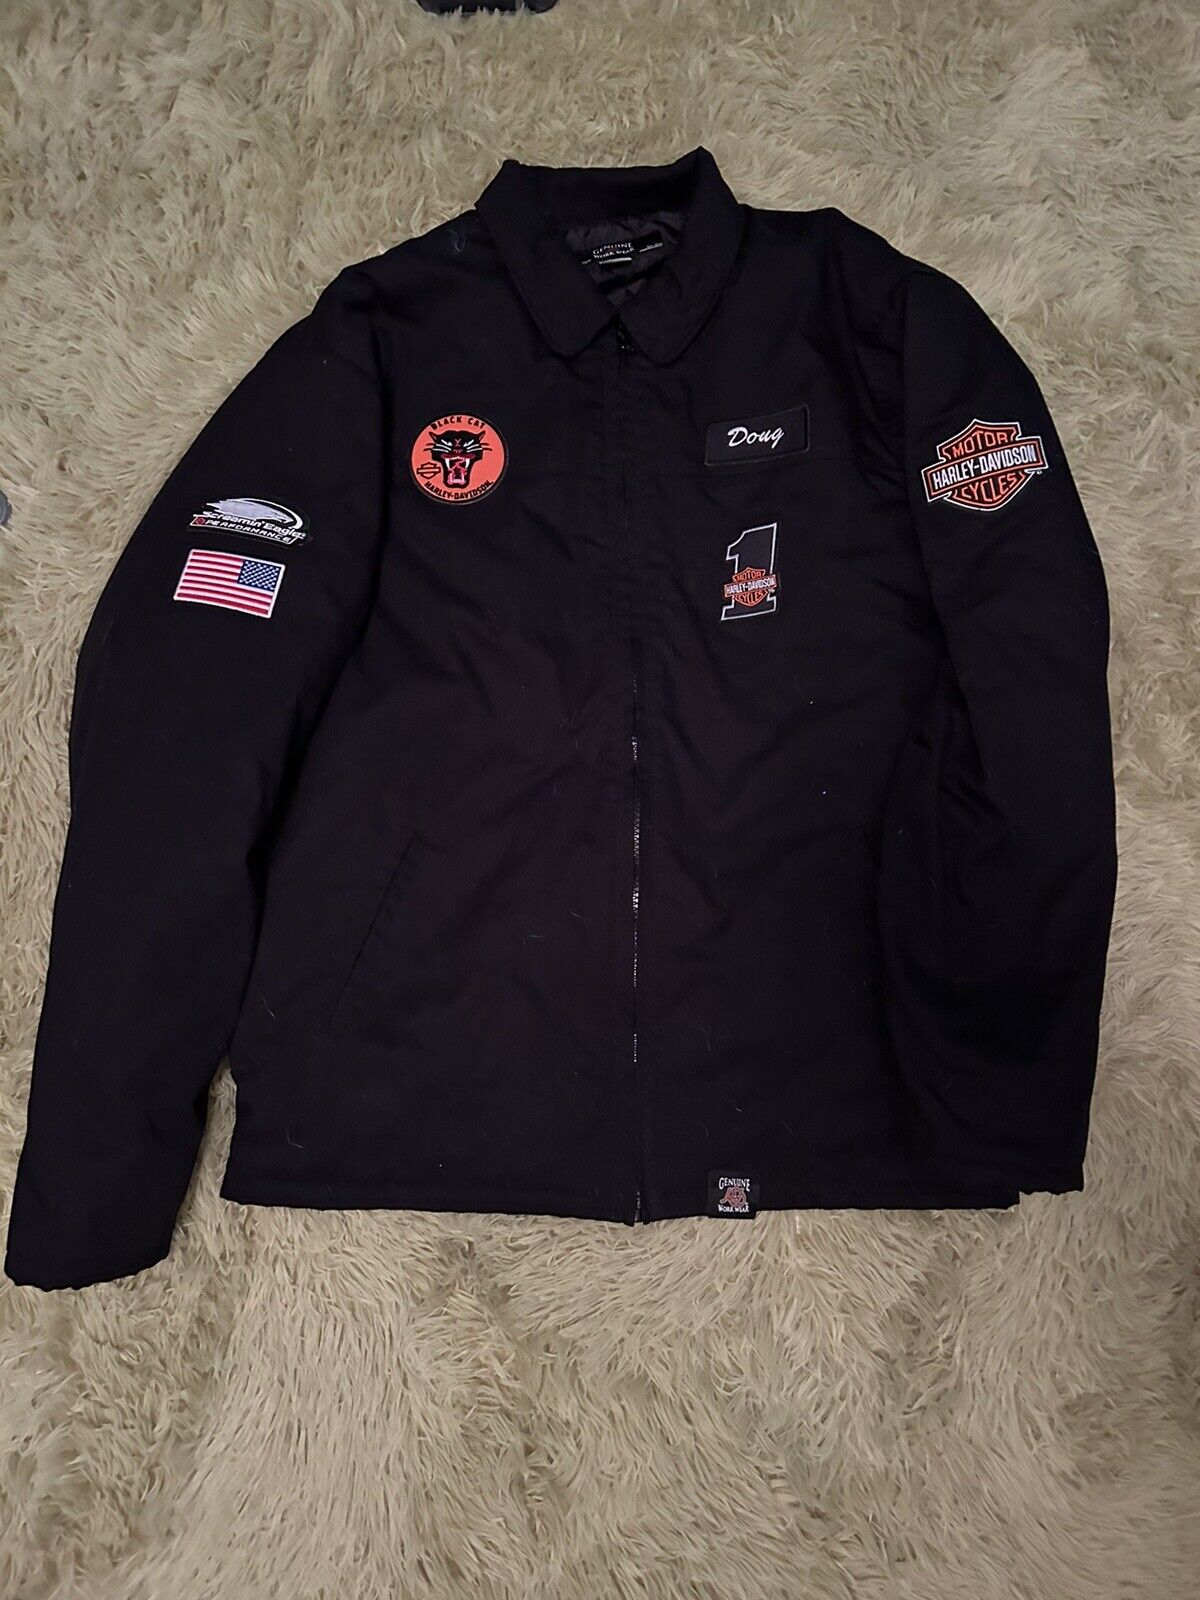 Genuine Workwear biker gang Harley Davidson jacket